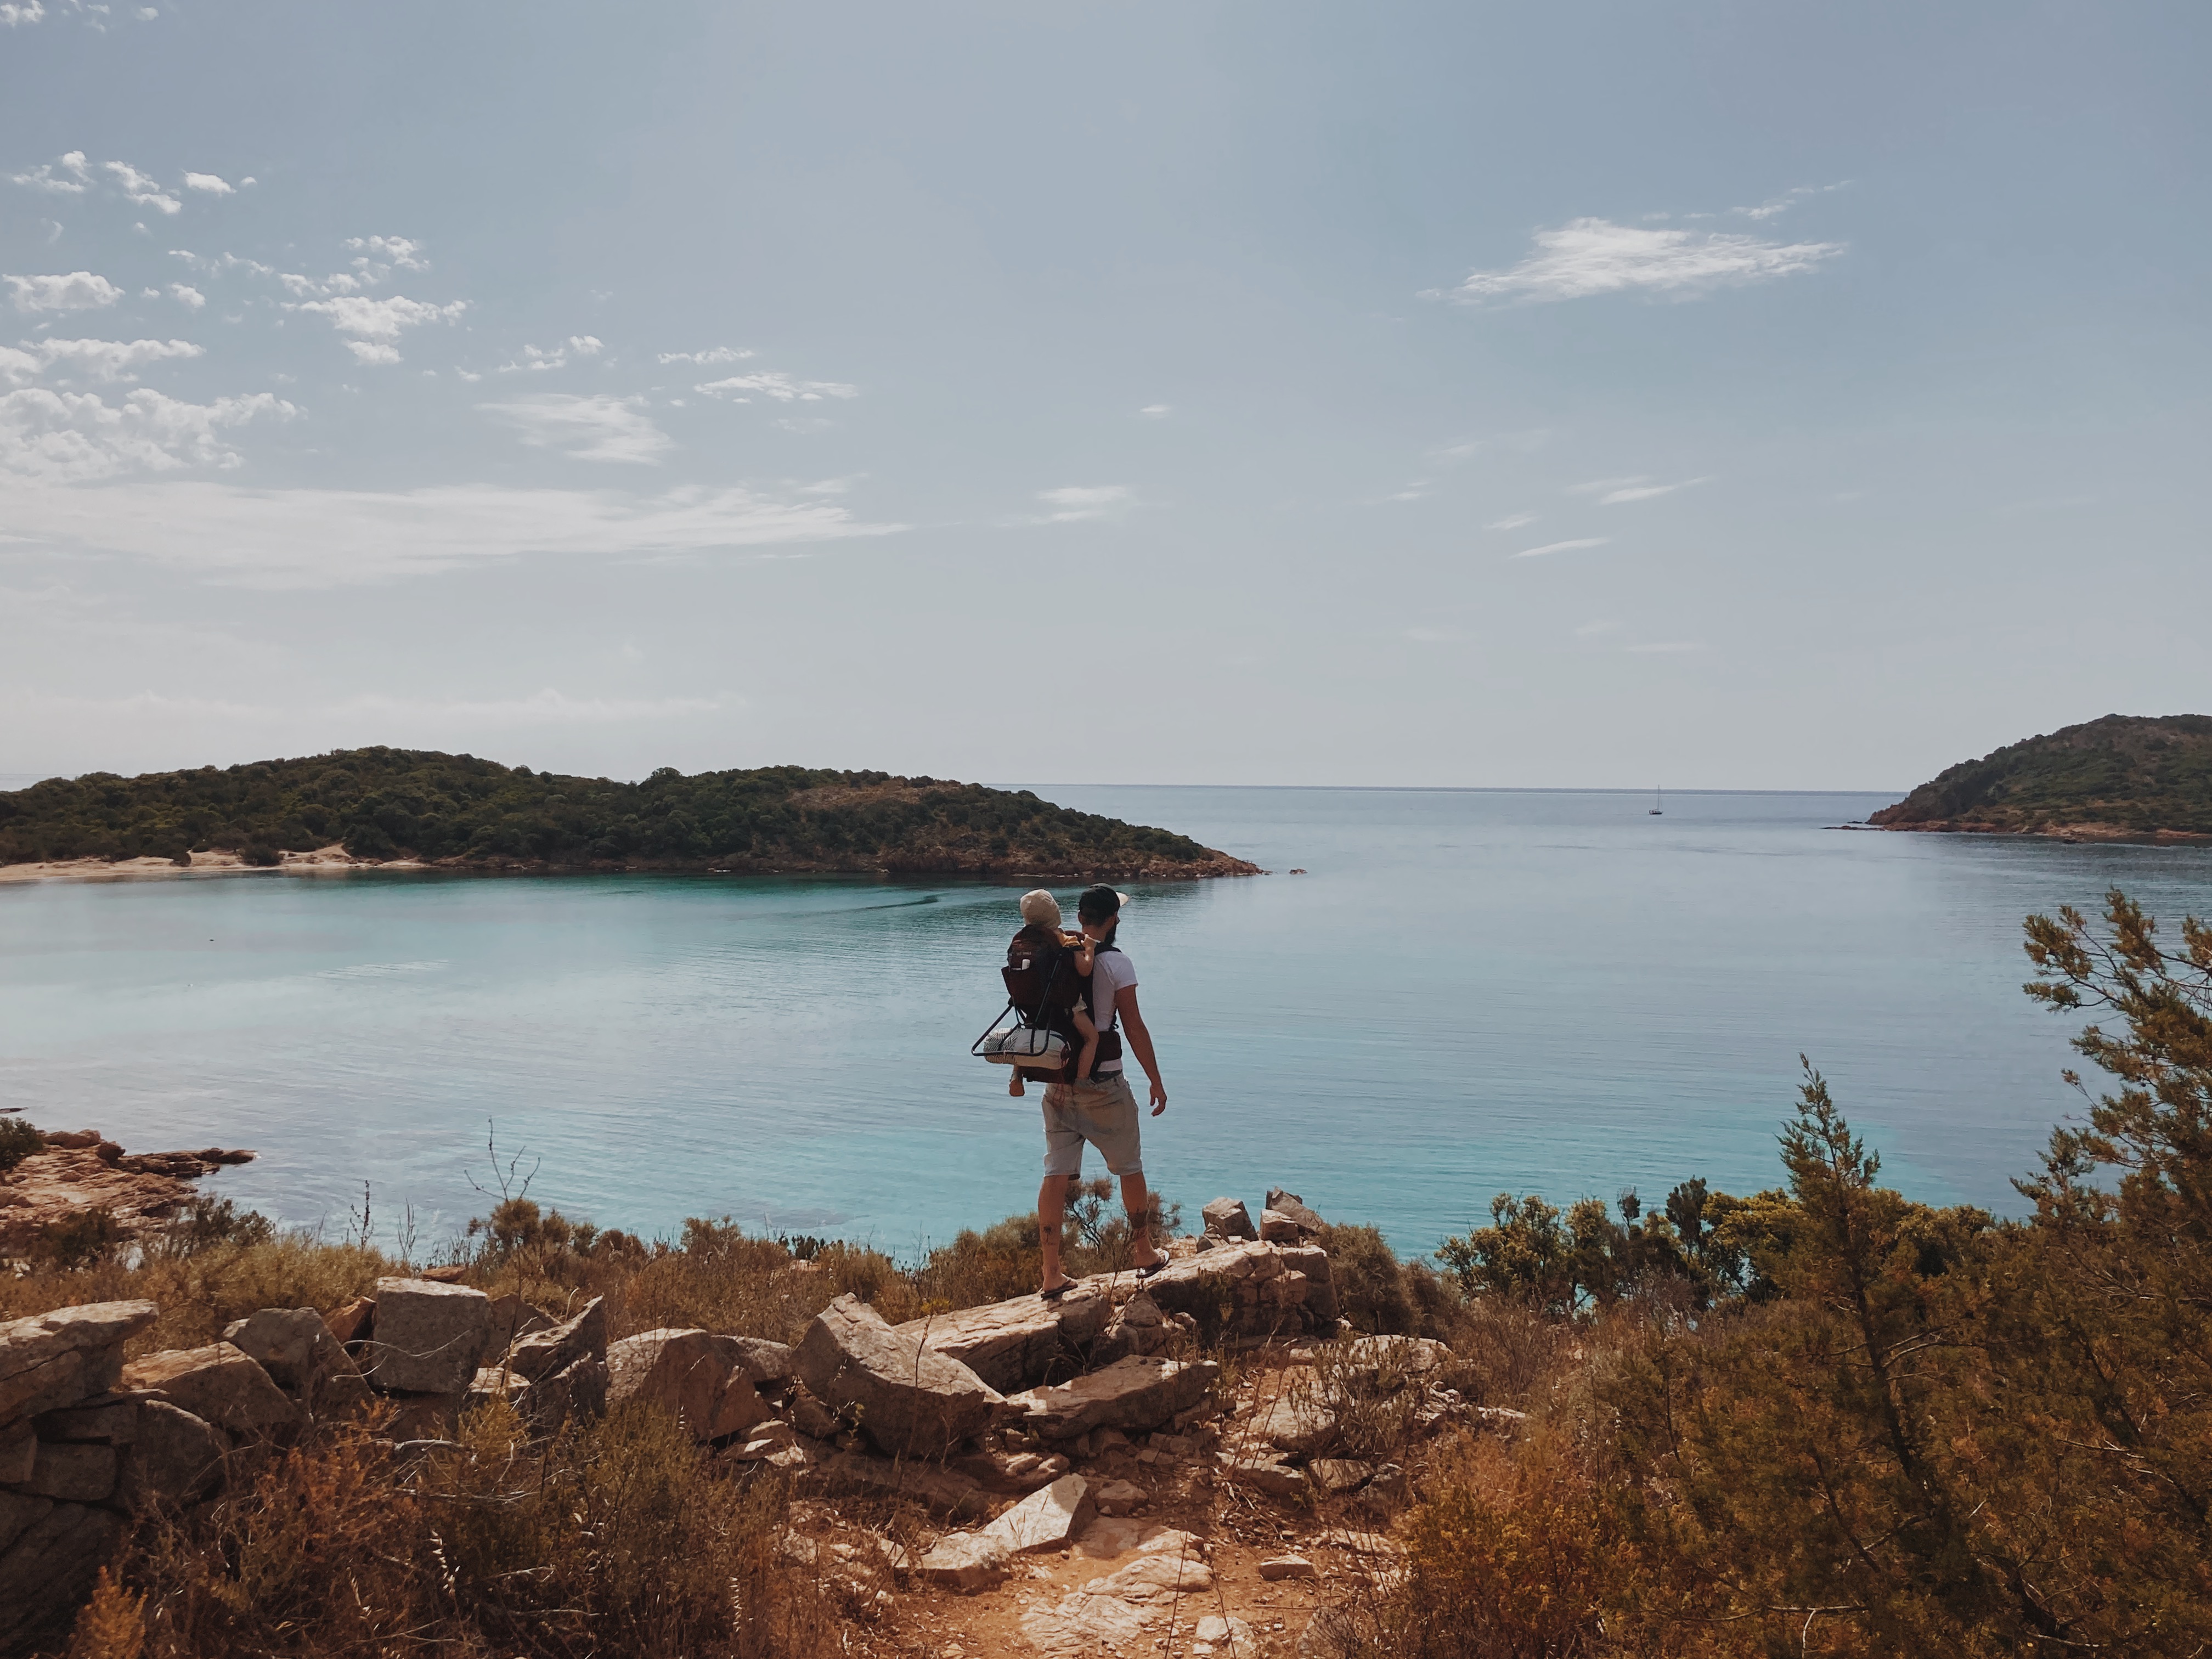 Wandern auf Korsika